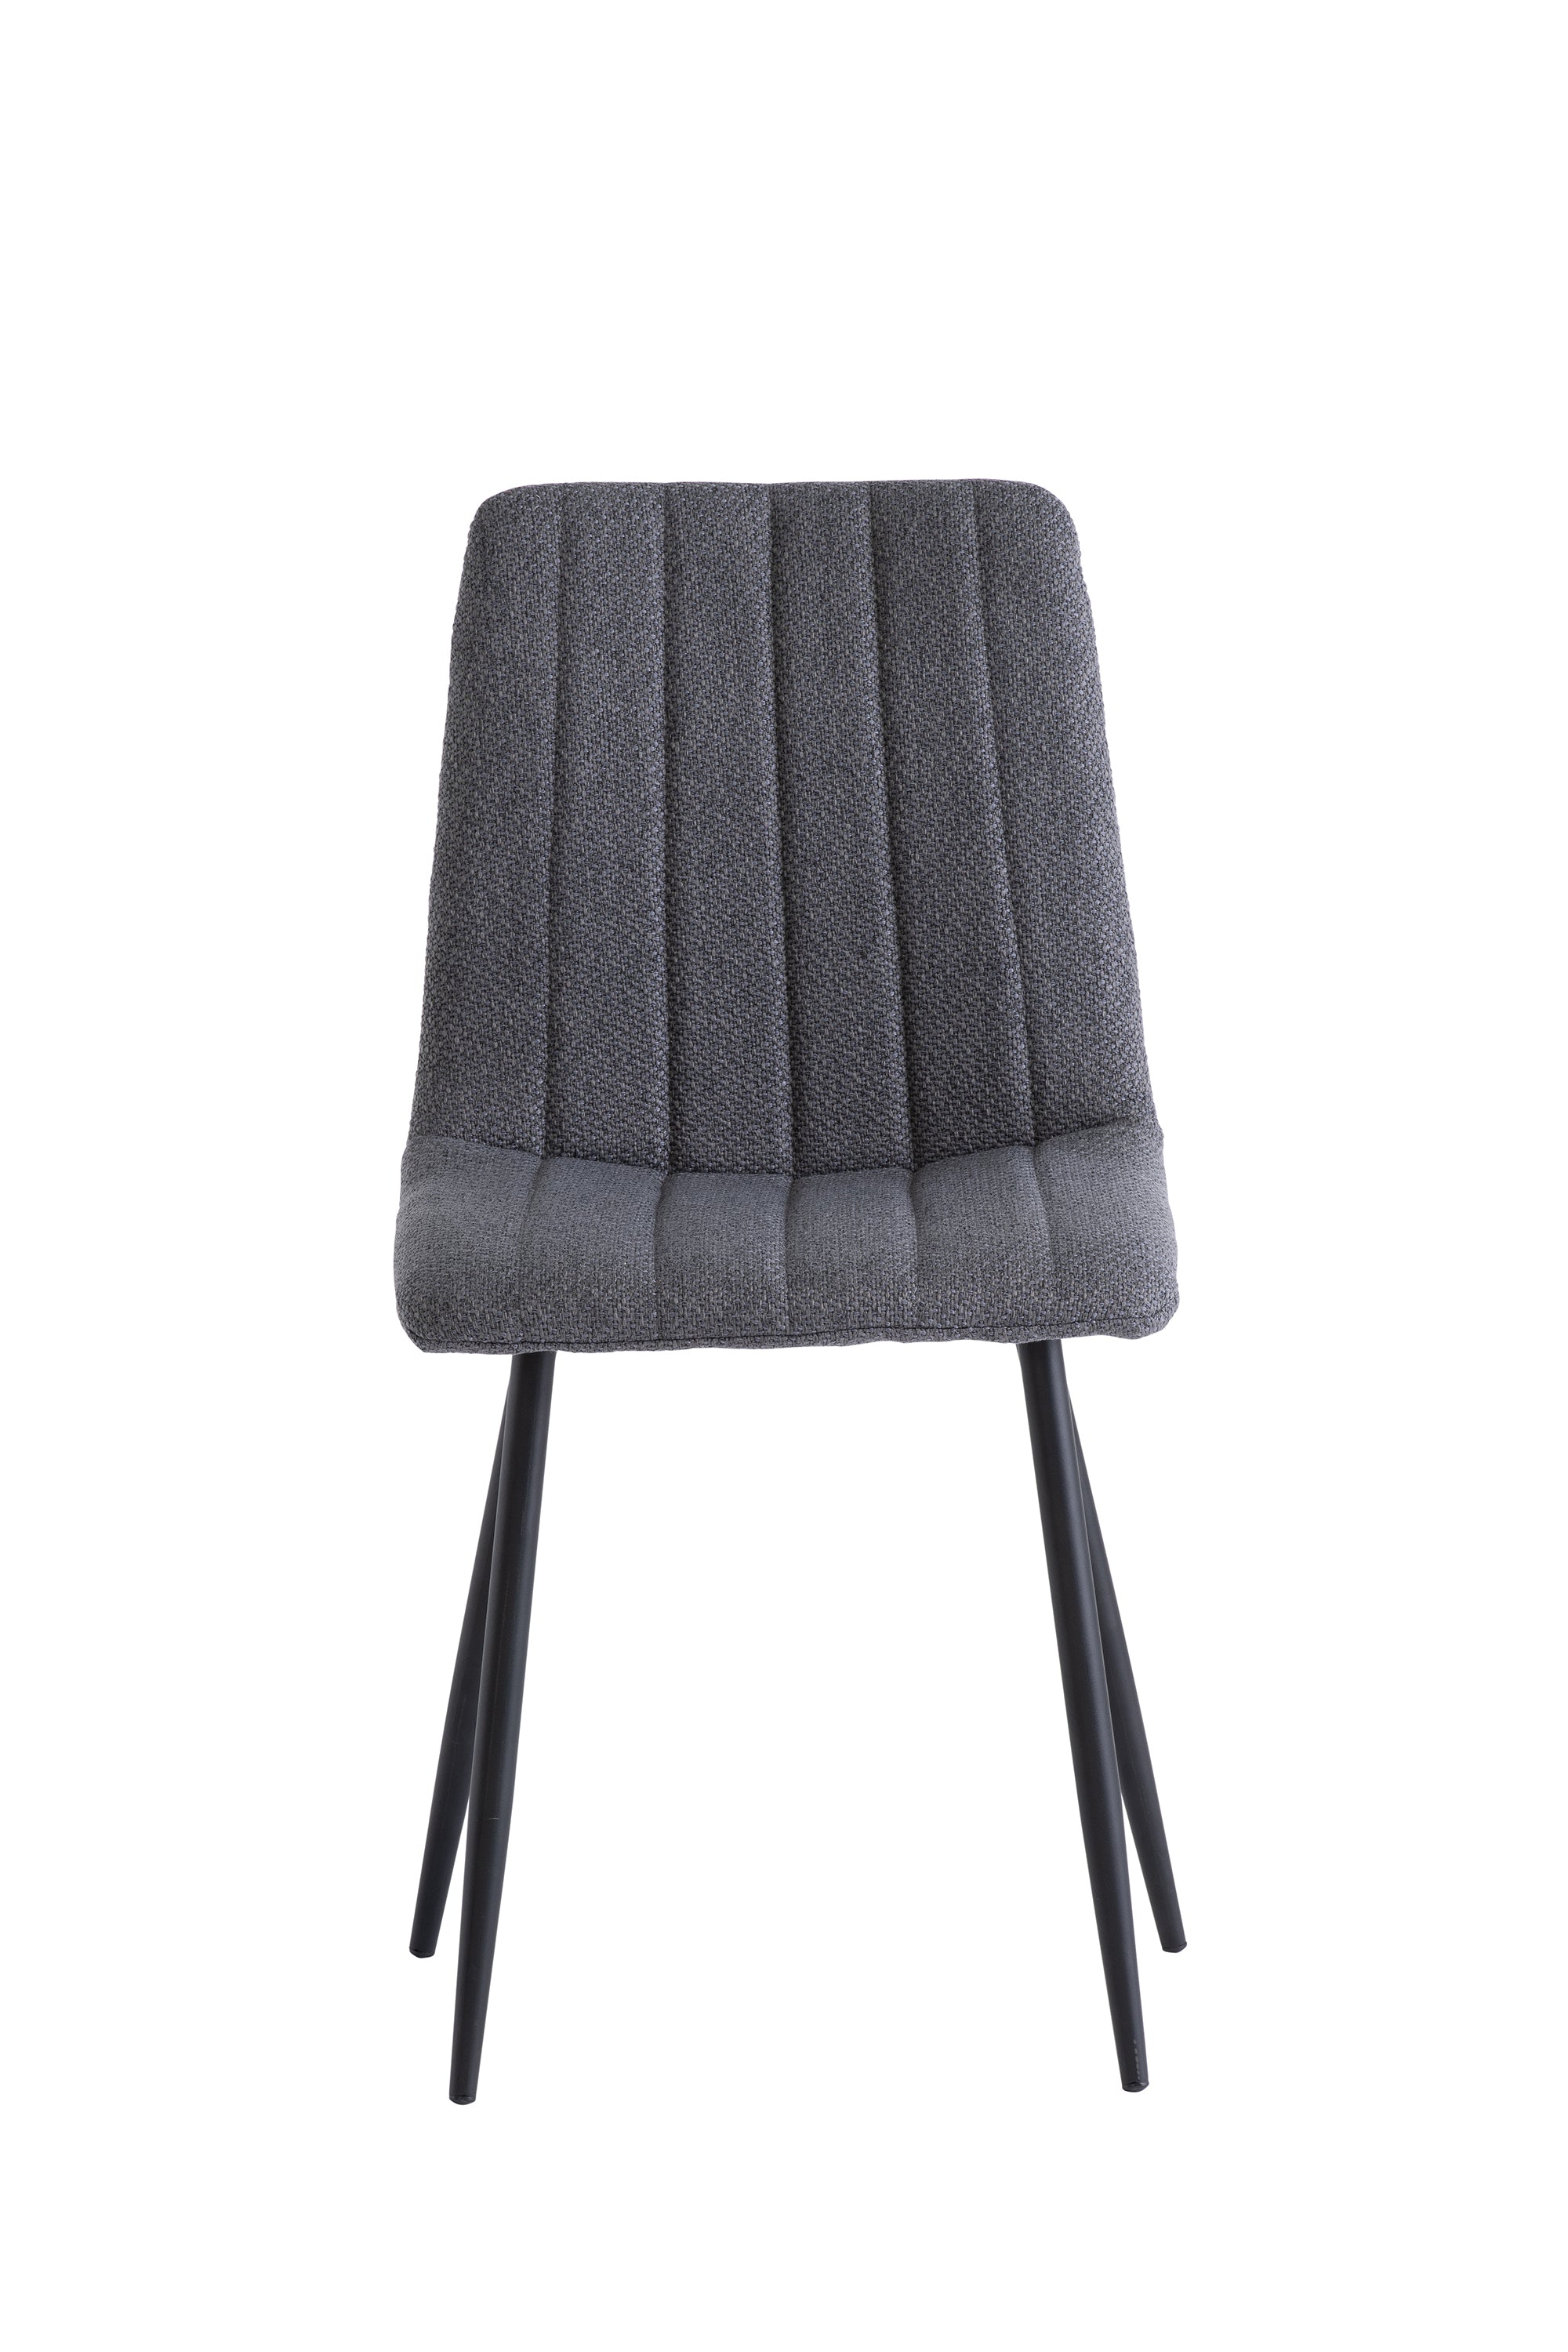 Lara Textured Fabric Dining Chair (Pairs)